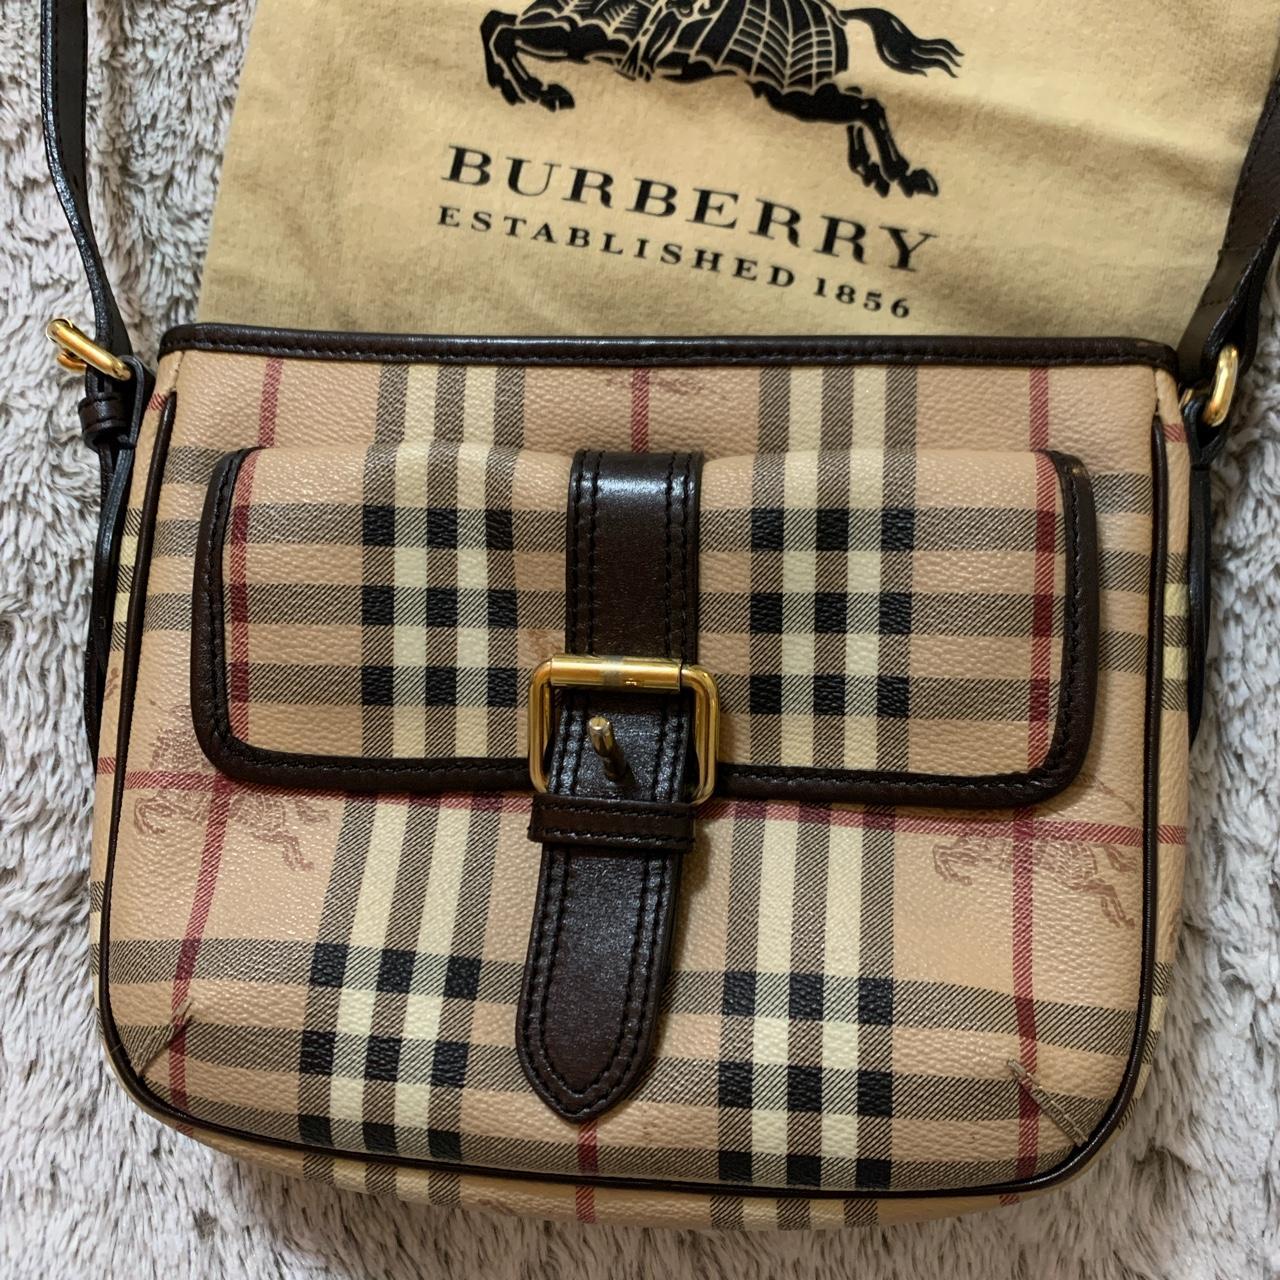 Burberry purse fake vs. real | Burberry purse, Purses, Burberry